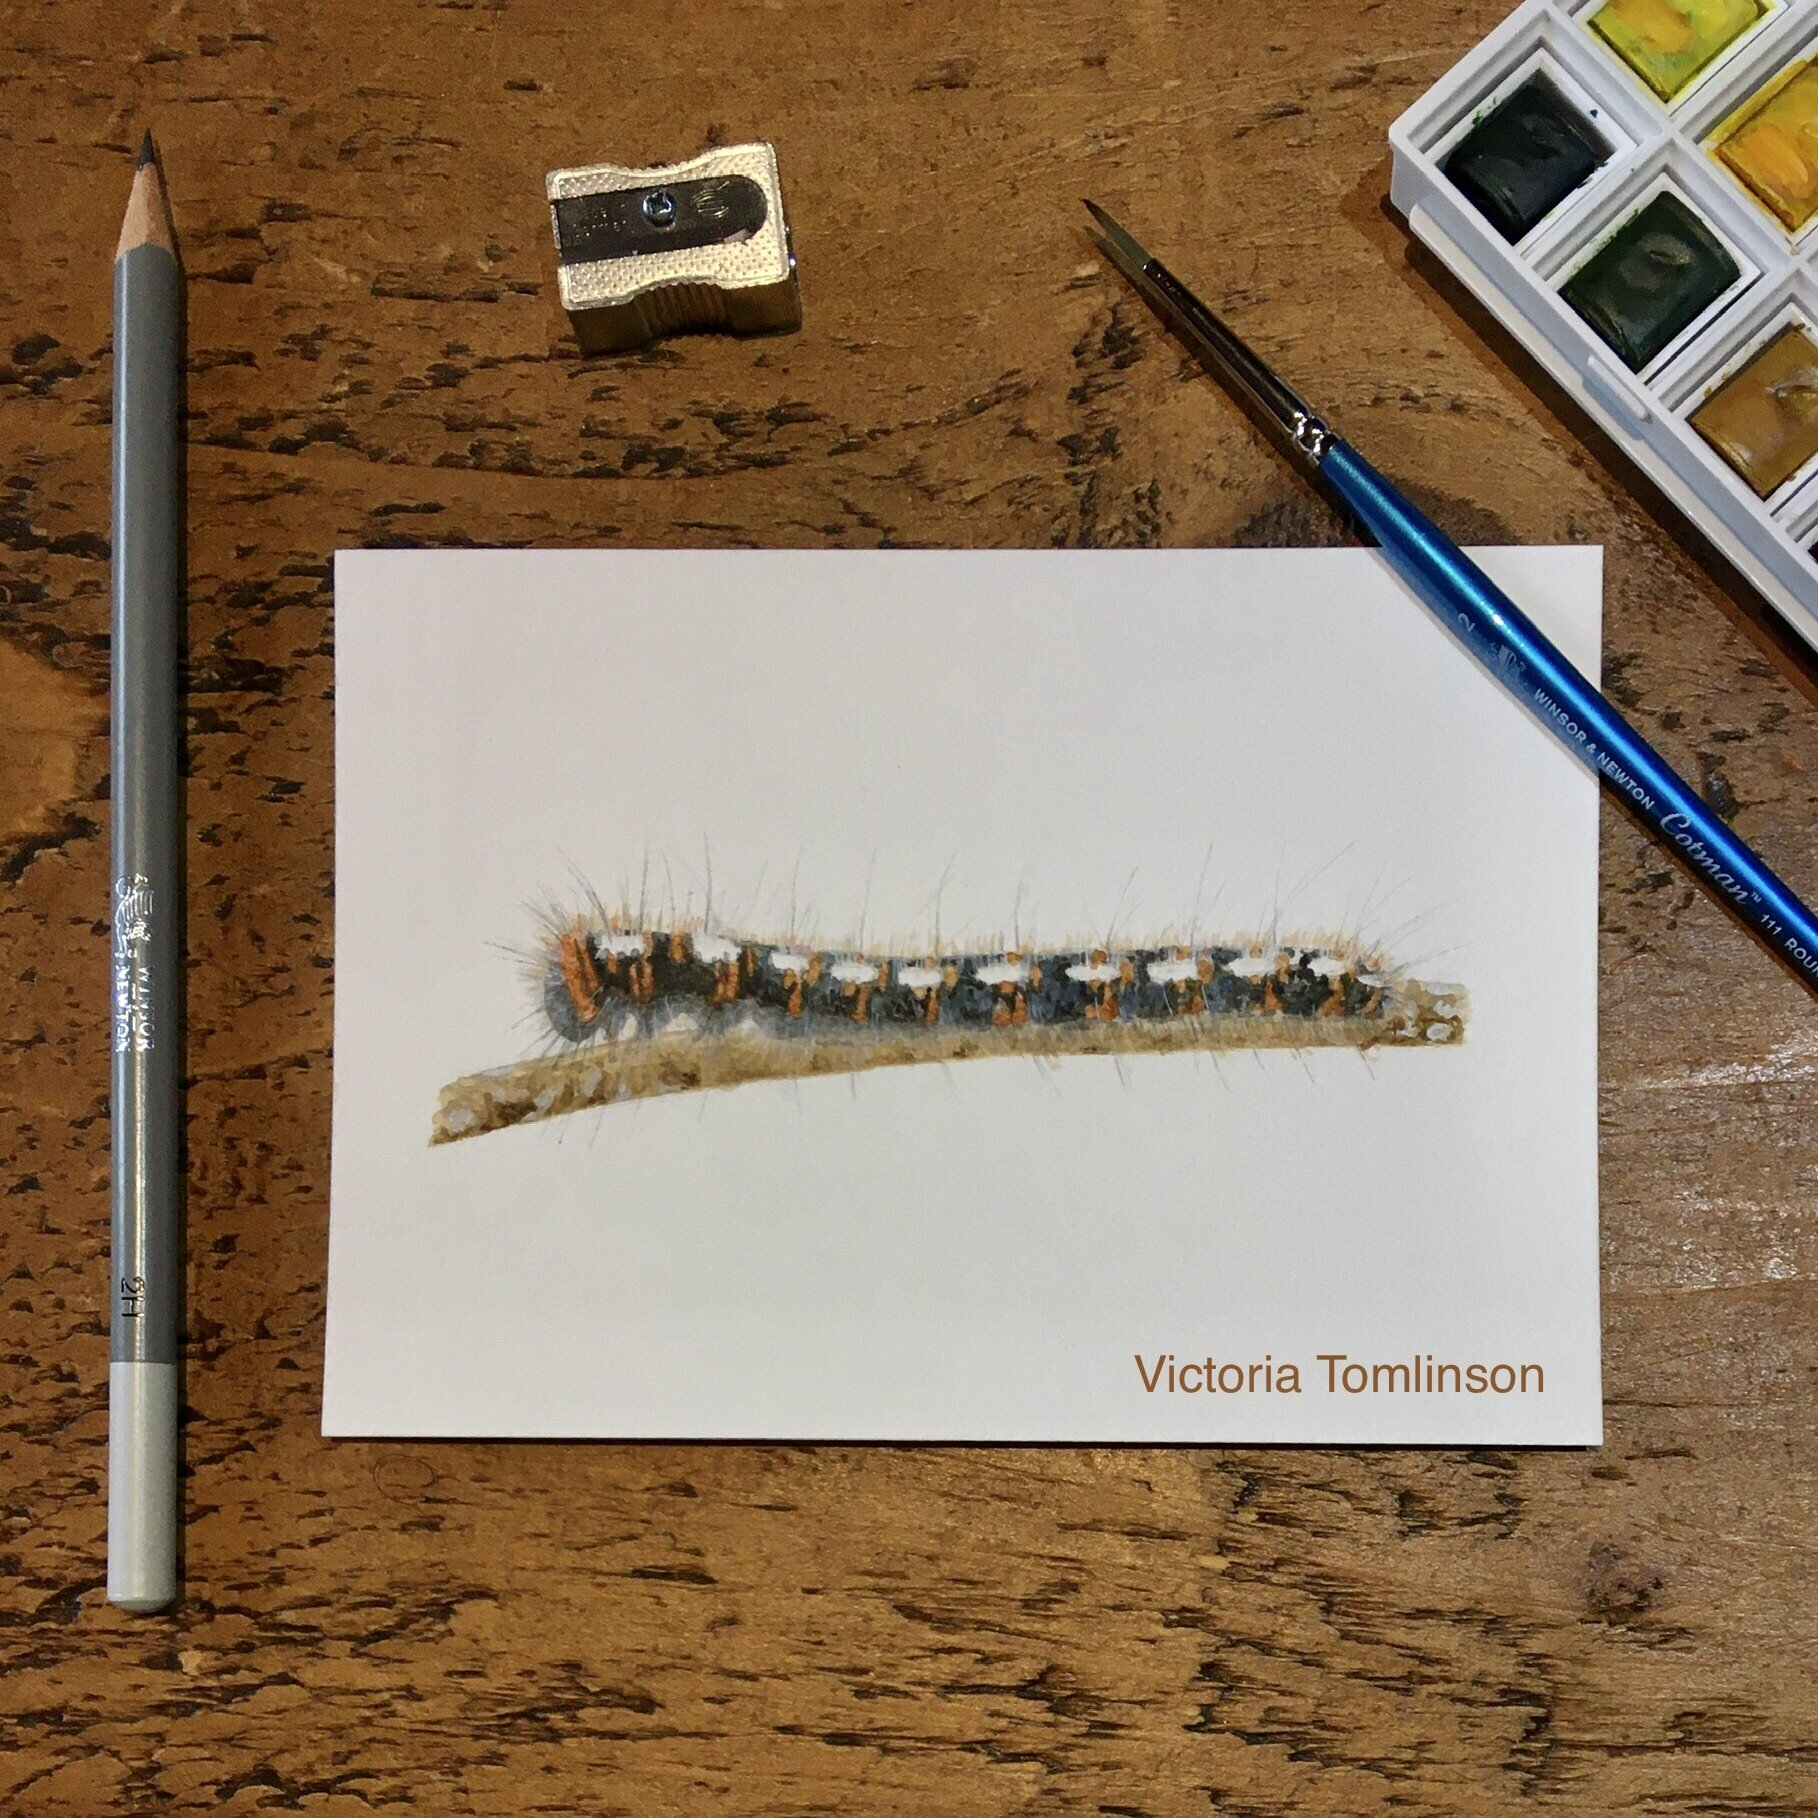 Caterpillar watercolour and pencil illustration